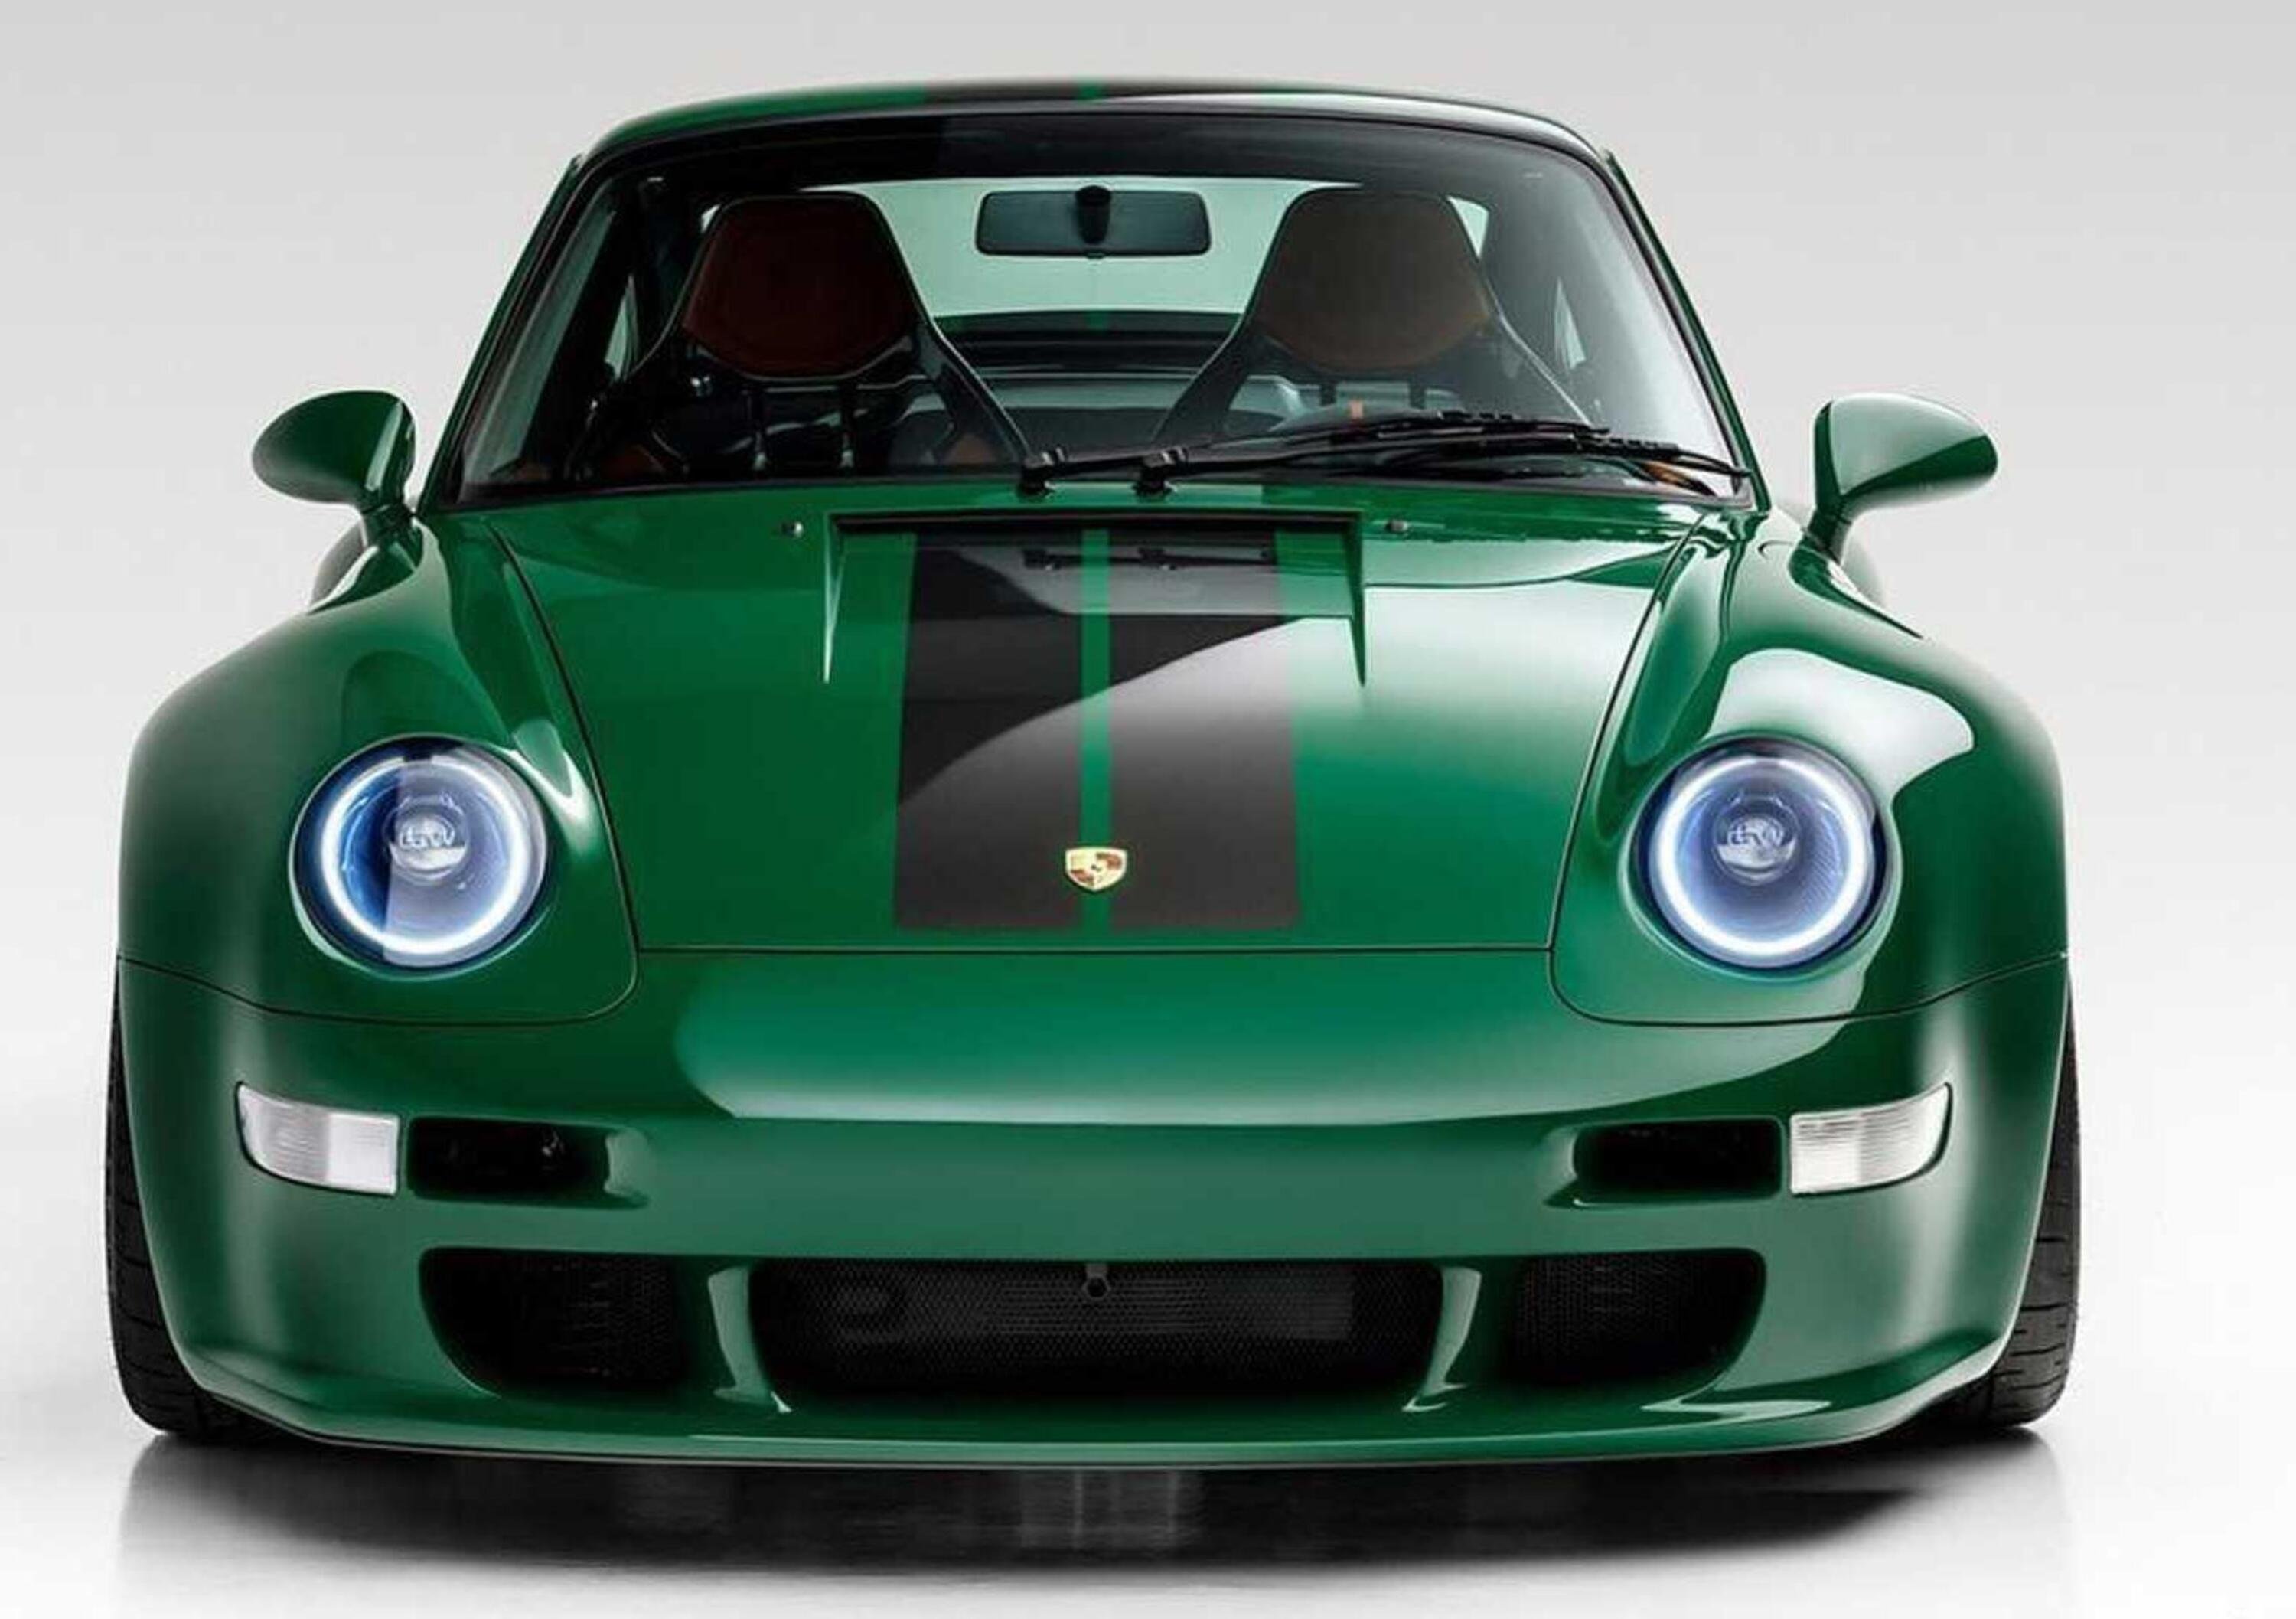 La Porsche 911 verde irlandese di Gunther Werks in 25 esemplari